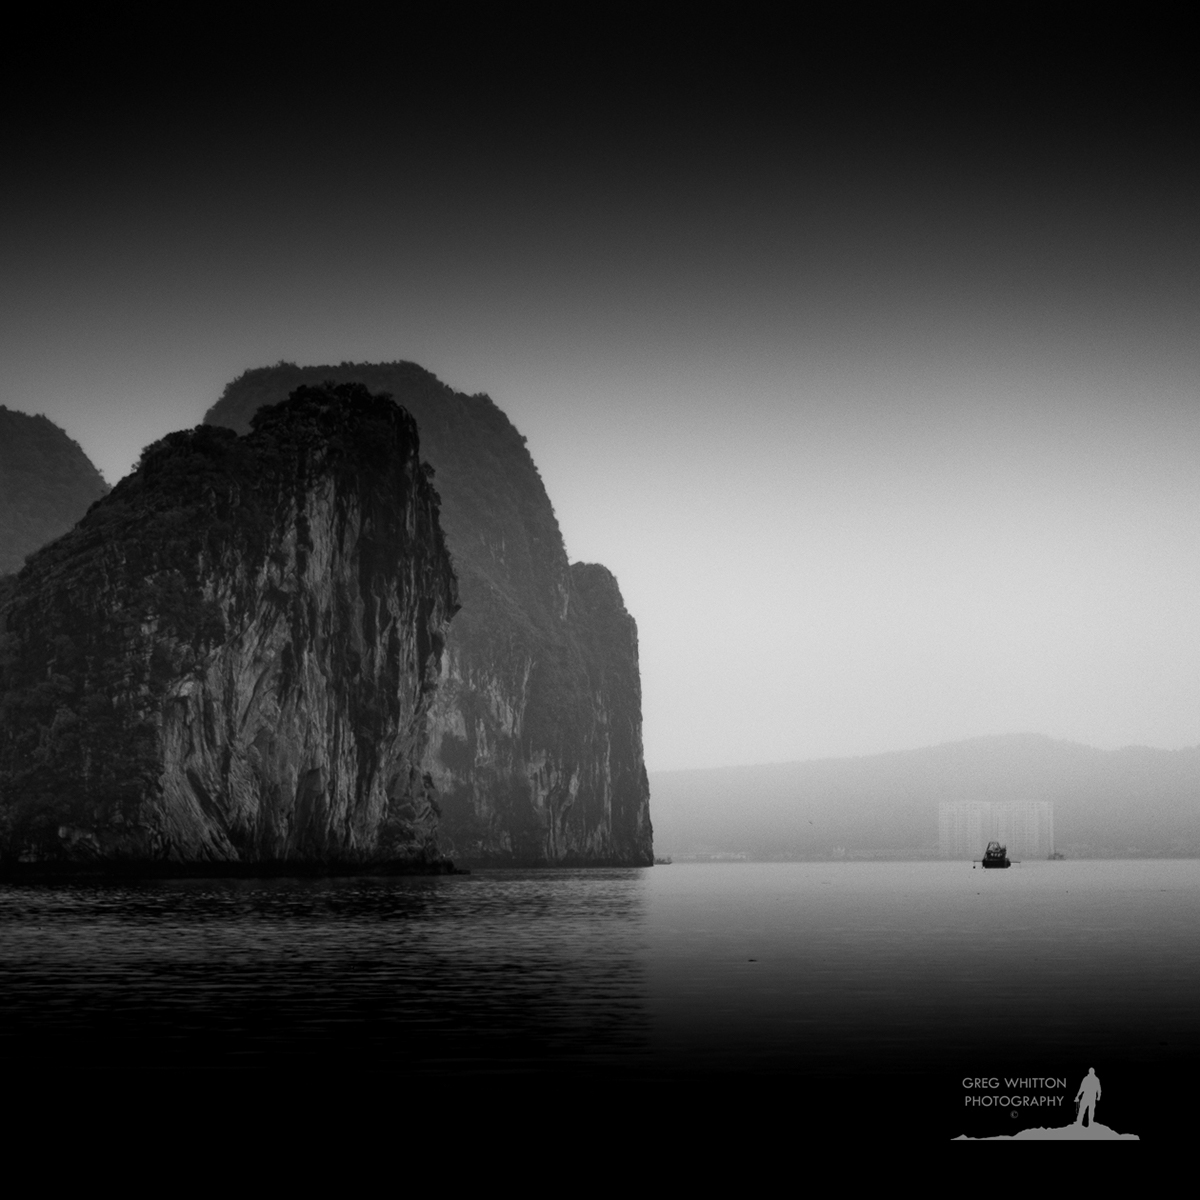 vietnam ha long bay Landscape seascape grain Mono black and white monochrome asia fishing Travel